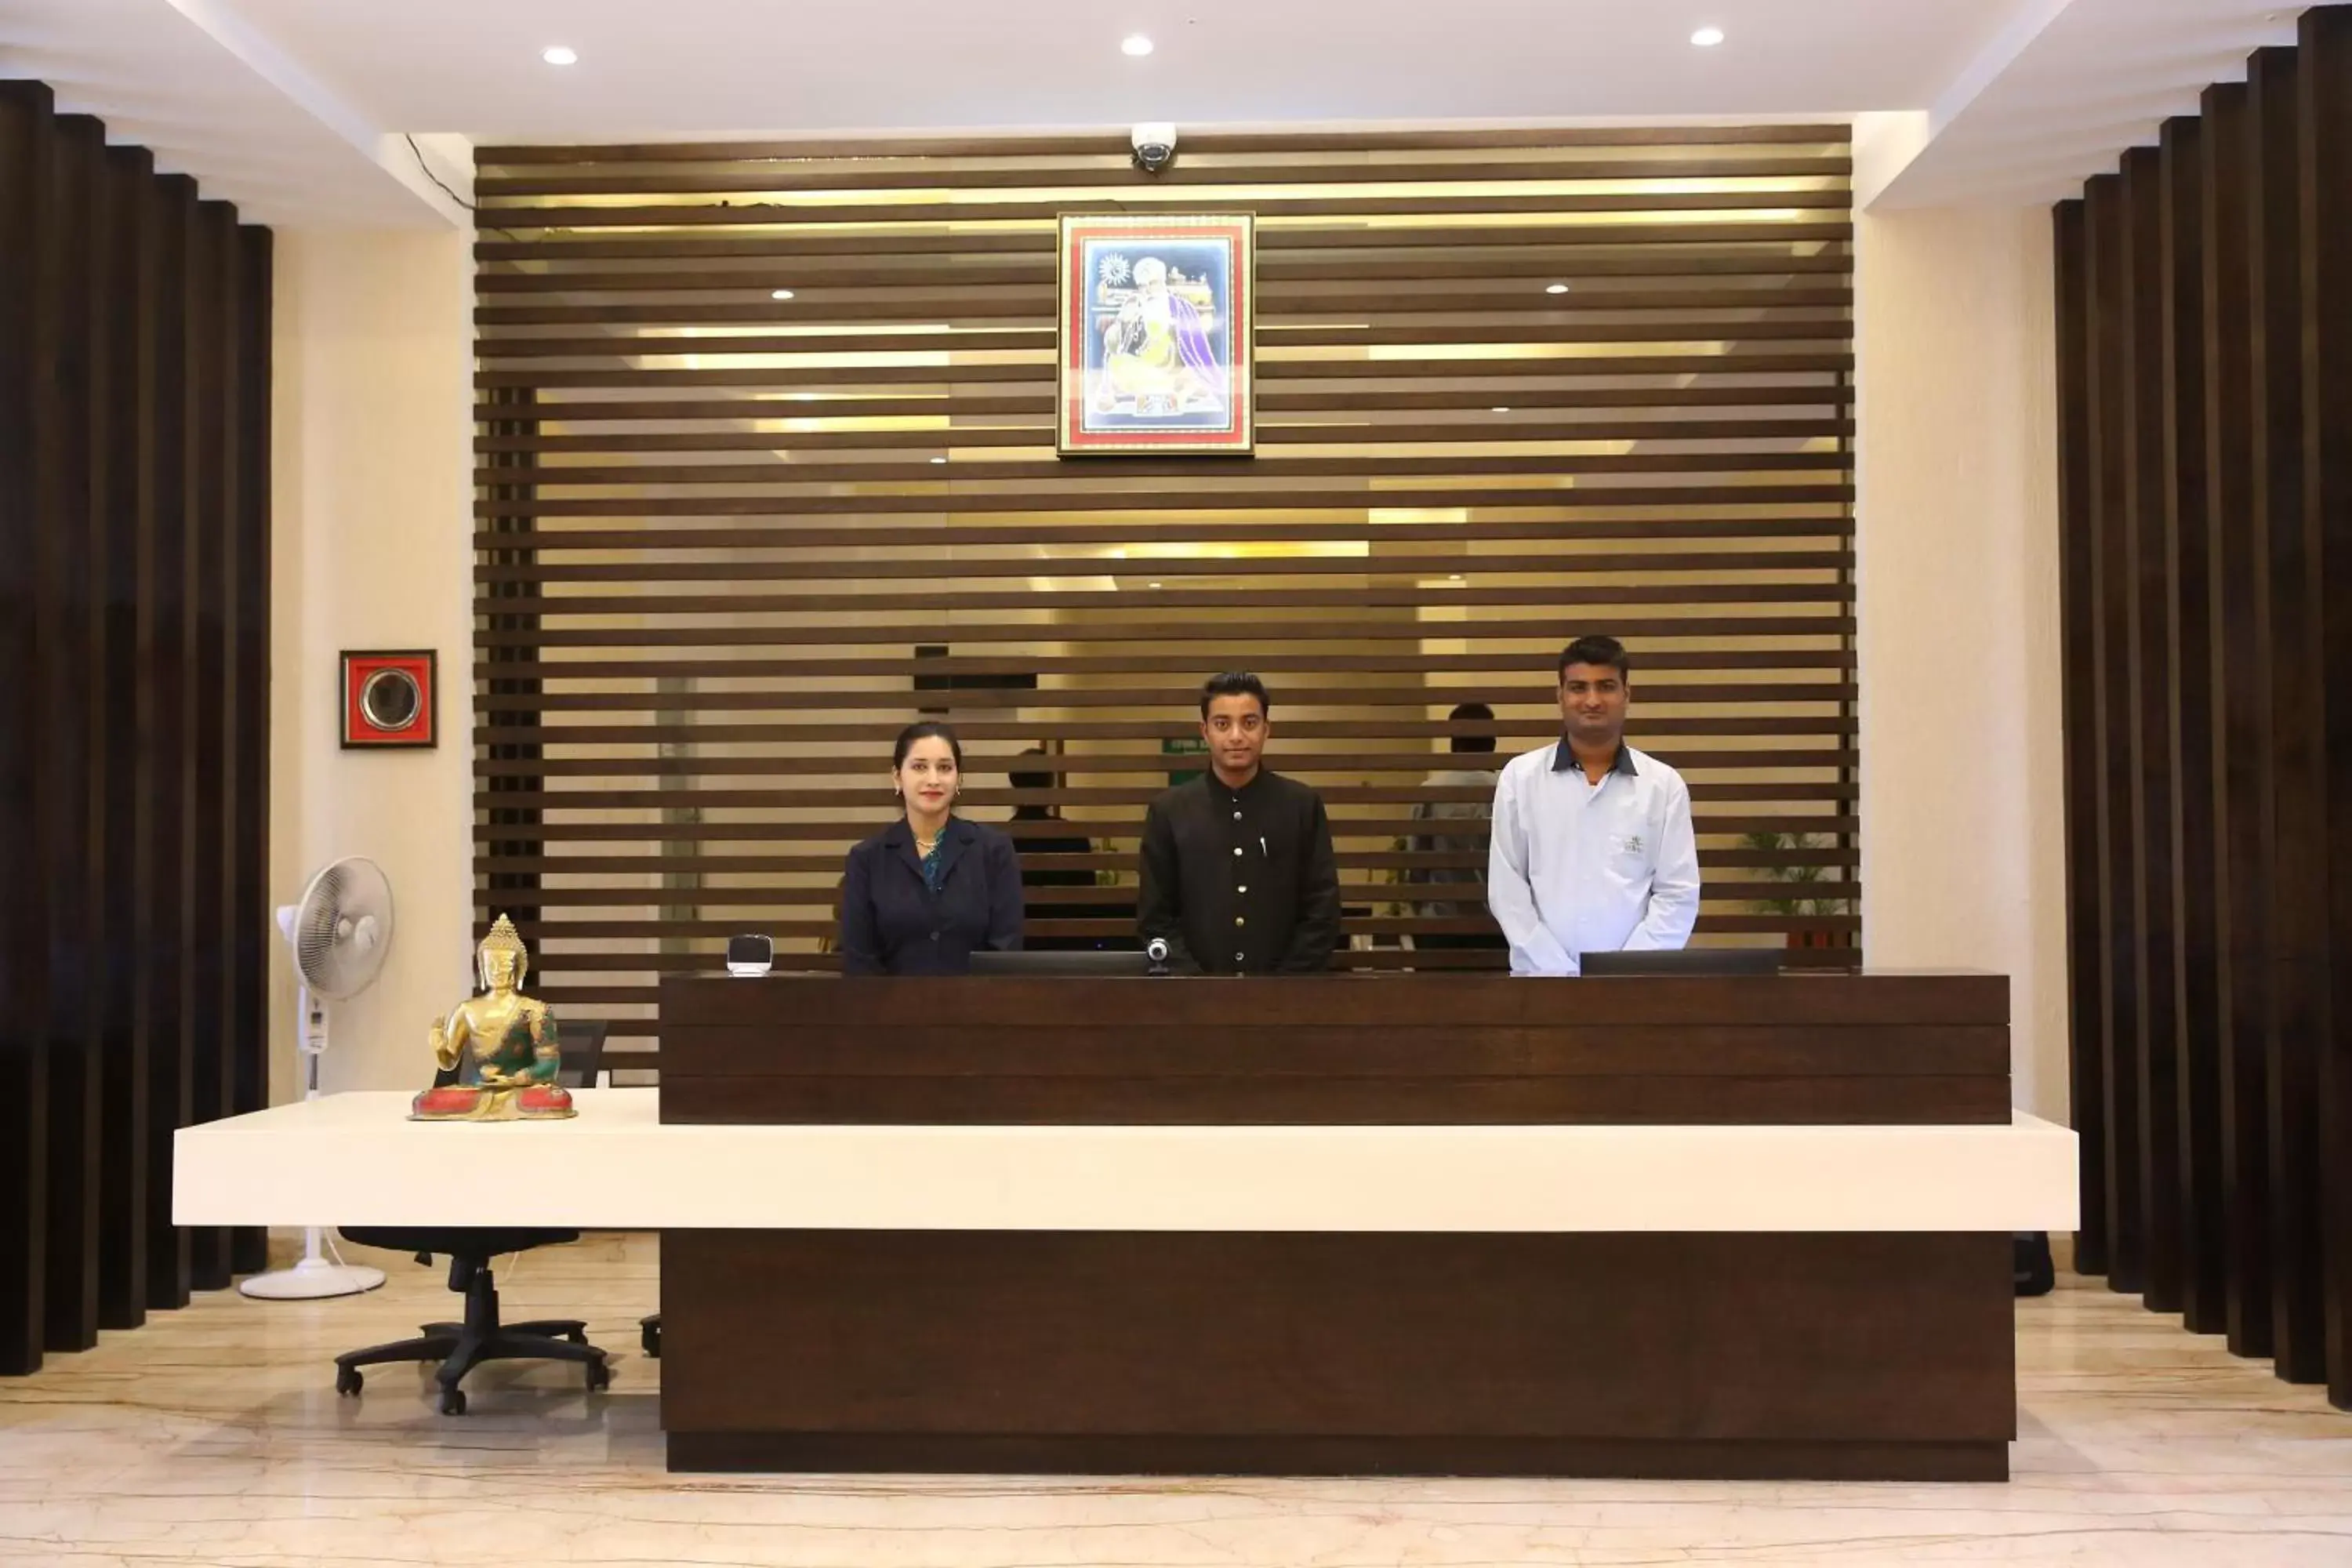 Staff in Le Roi Udaipur